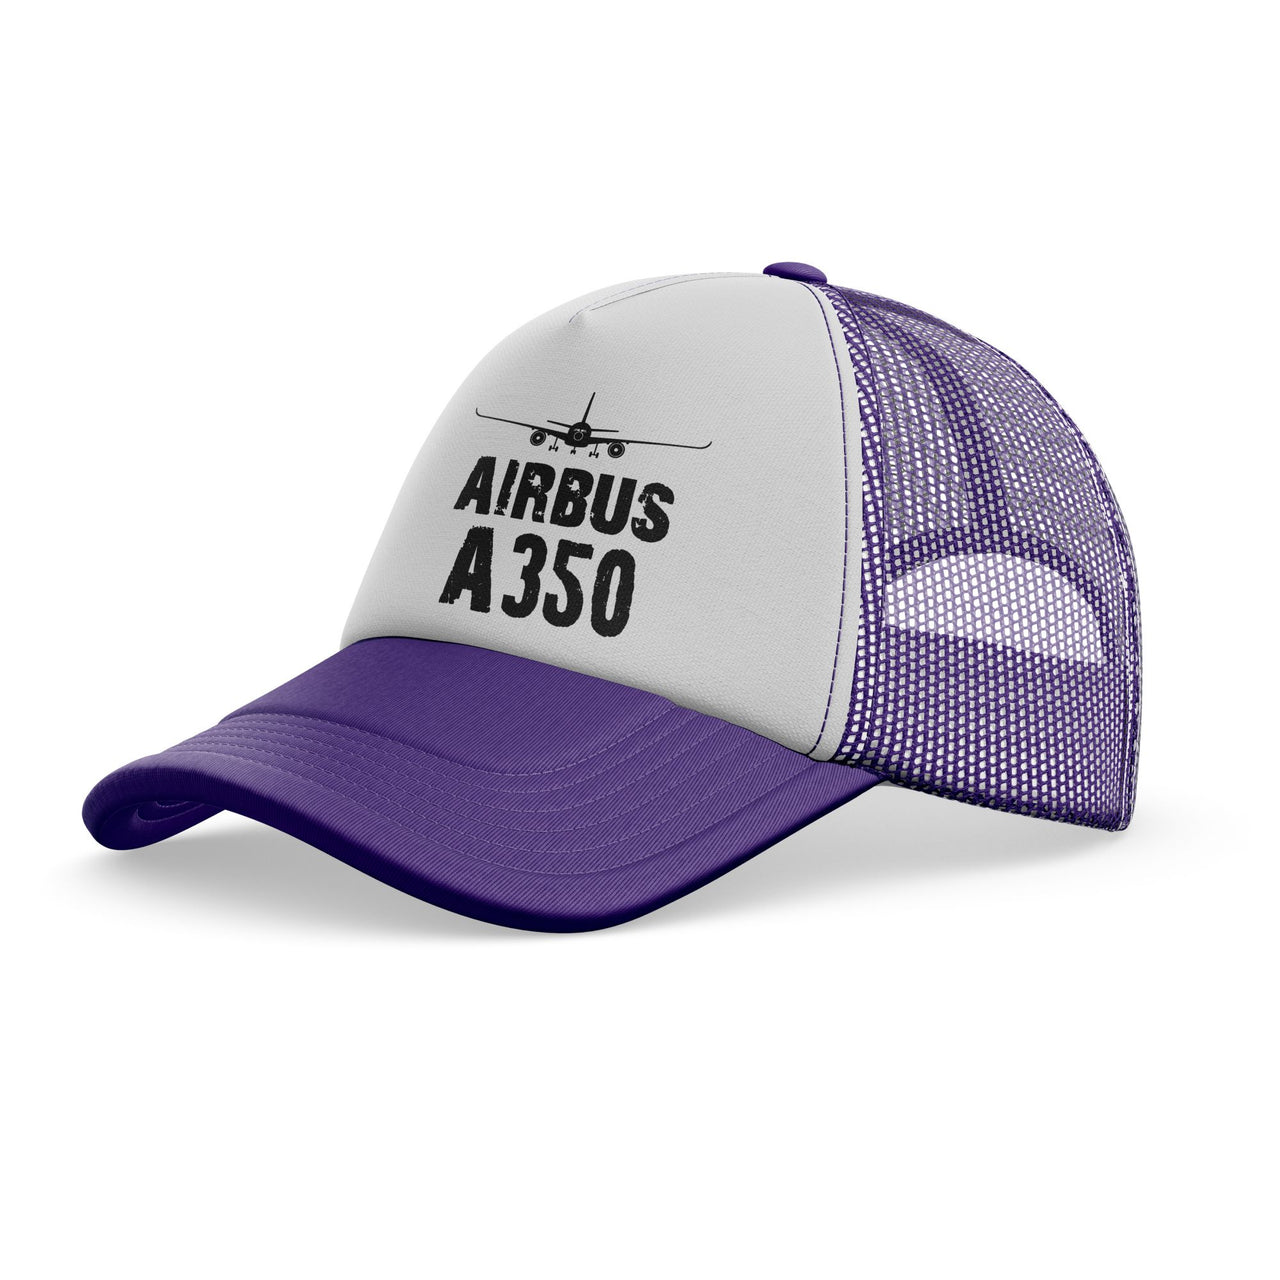 Airbus A350 & Plane Designed Trucker Caps & Hats